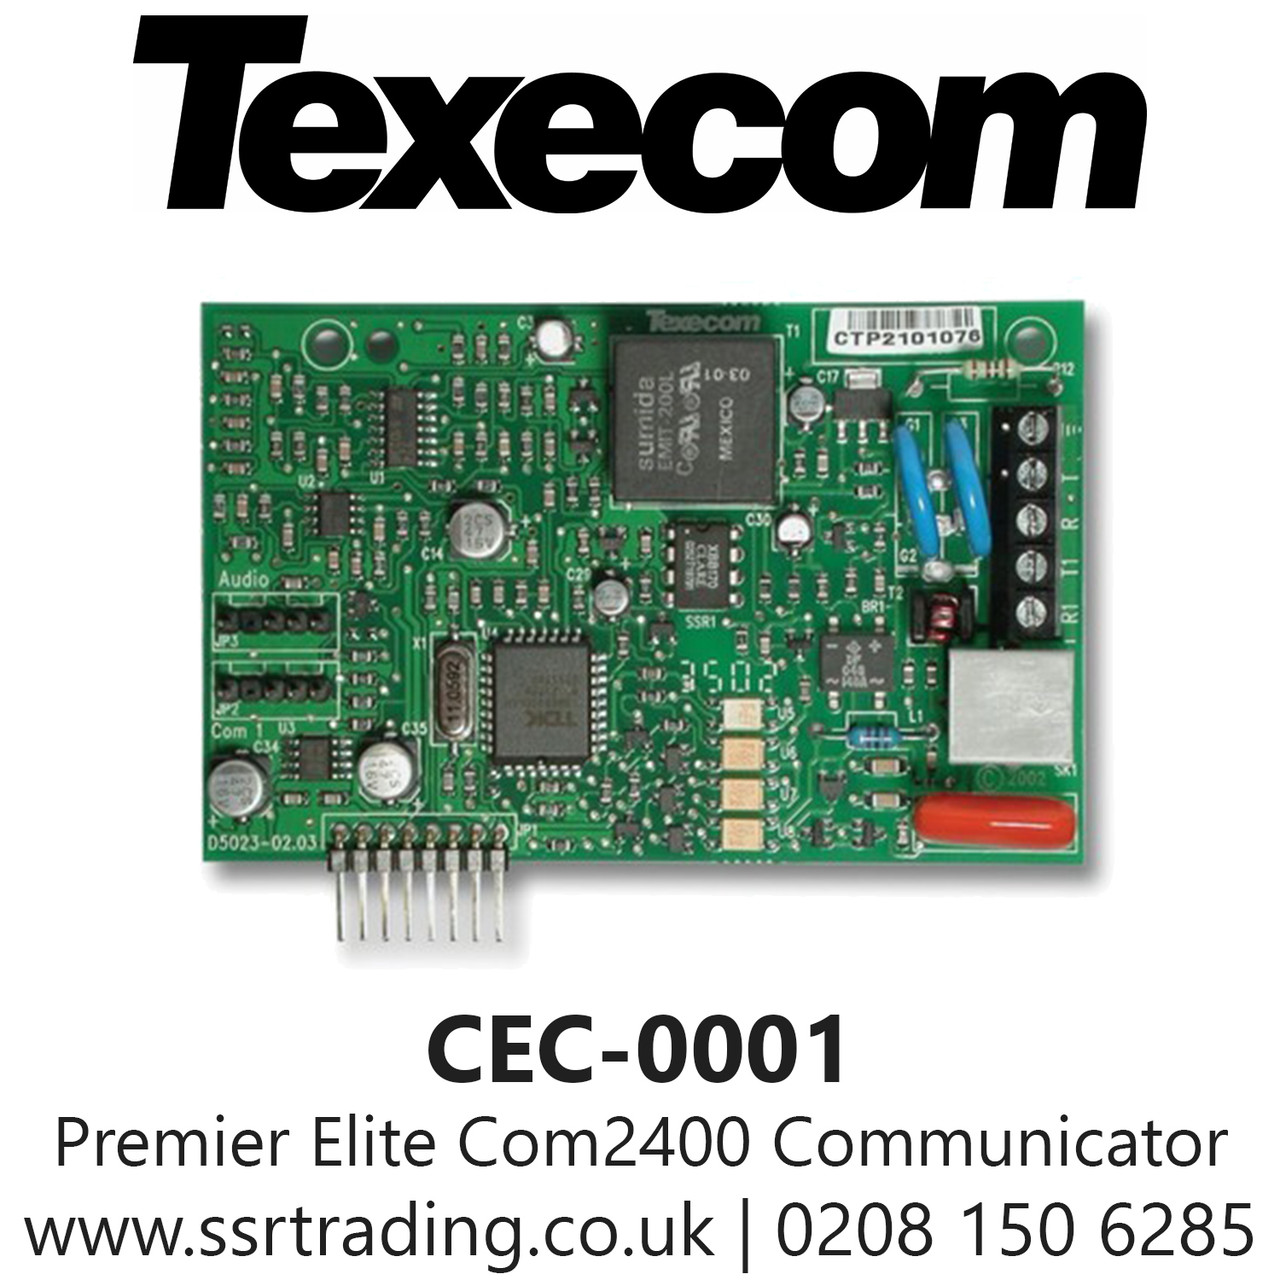 Texecom Premier Elite Com2400 Digital Communicator - CEC-0001